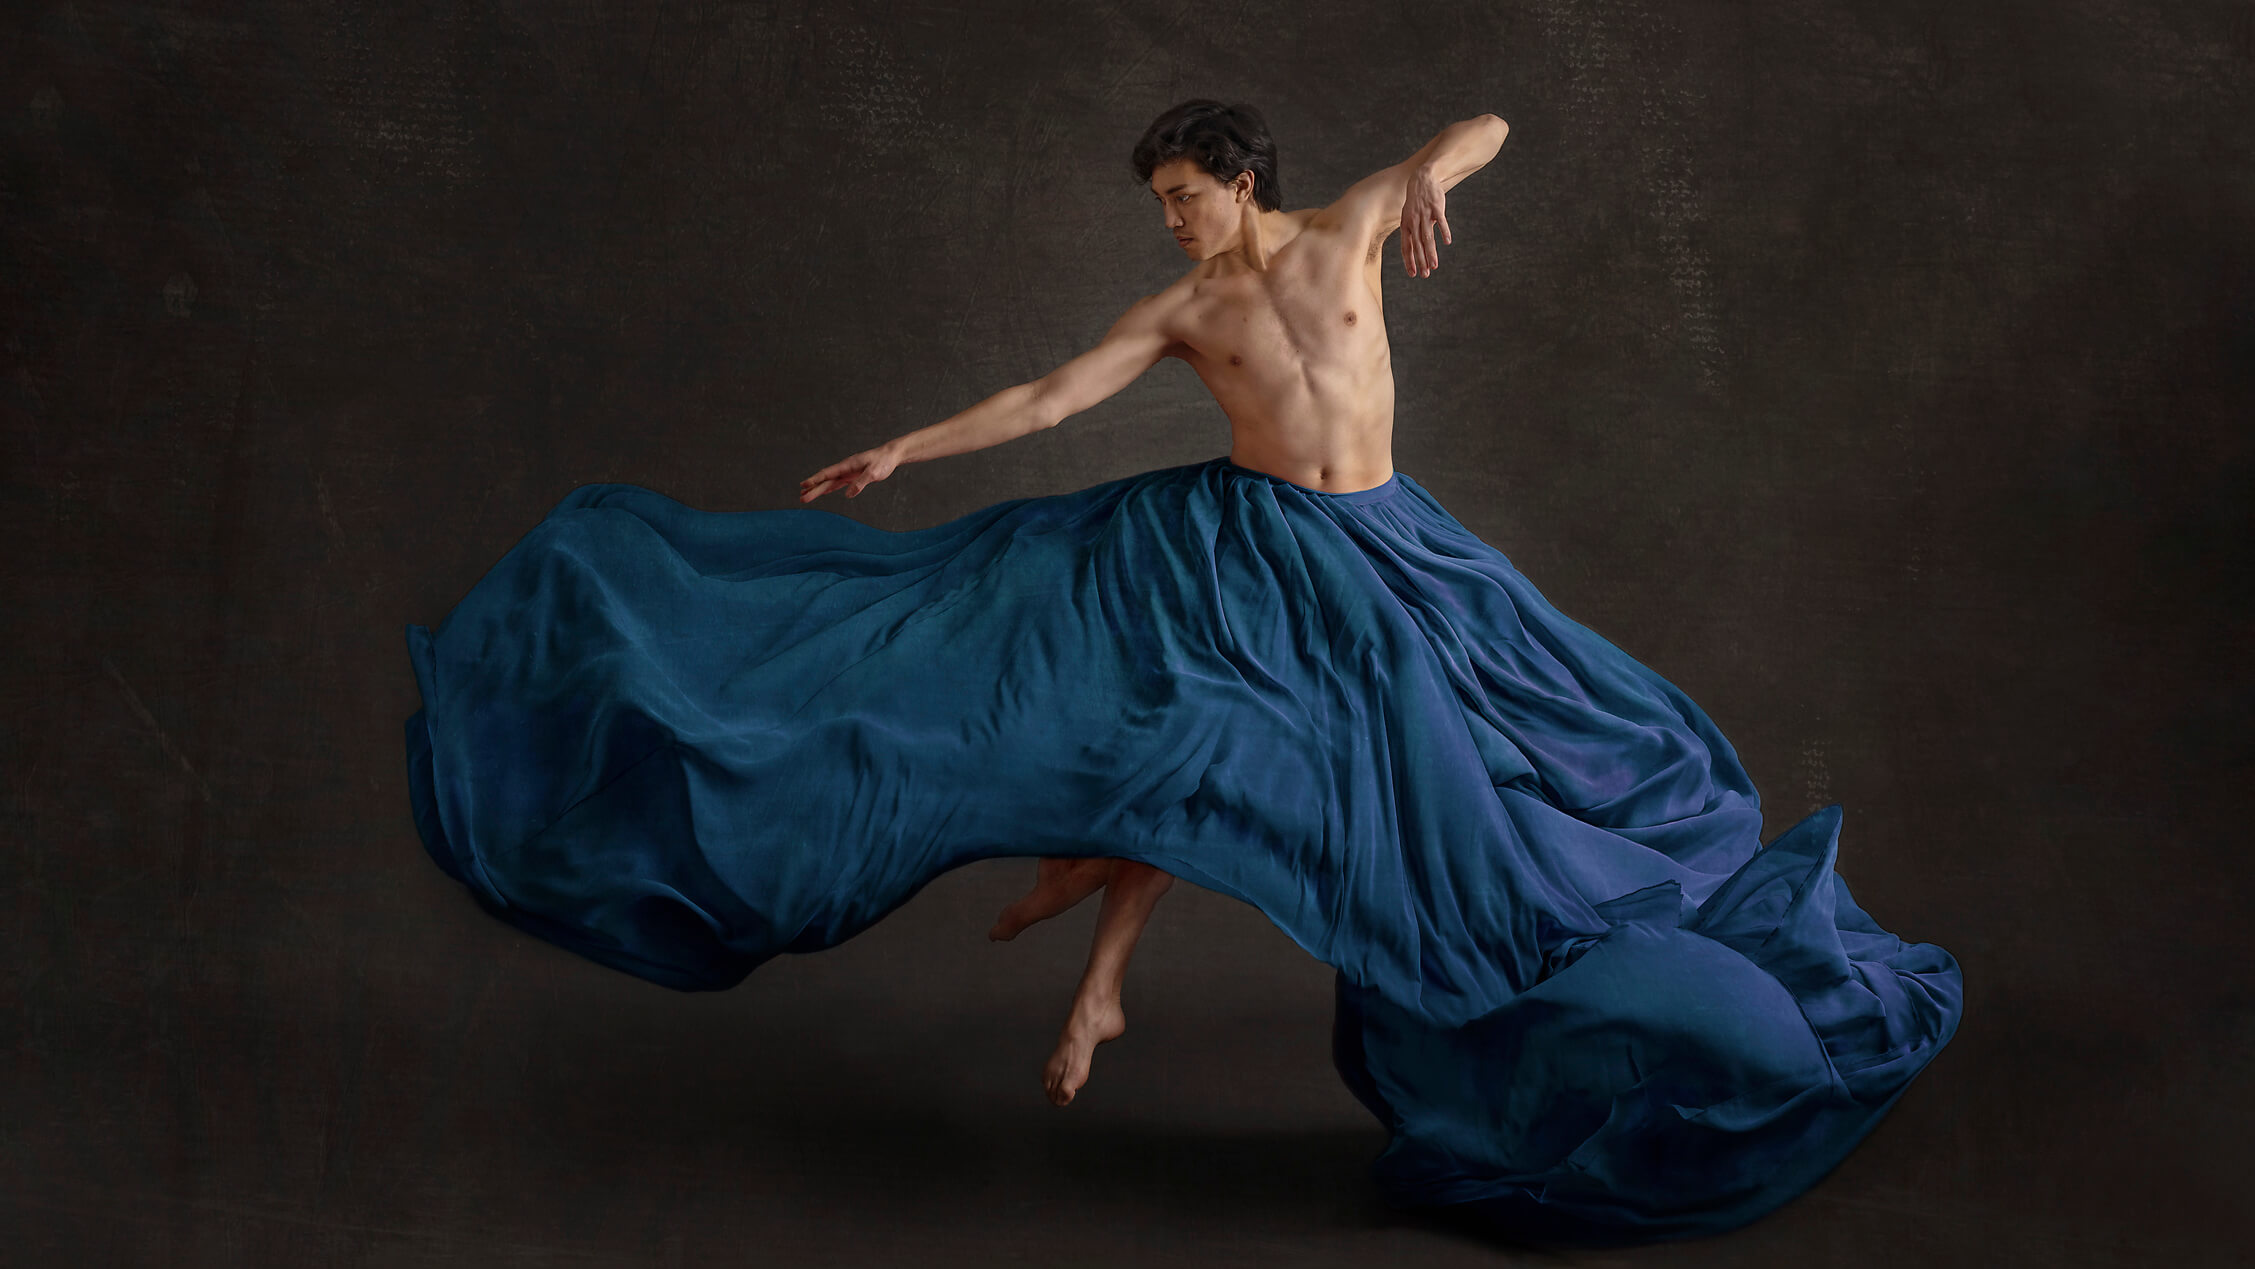 Palos Verdes, CA dance portrait of a man in a blue skirt